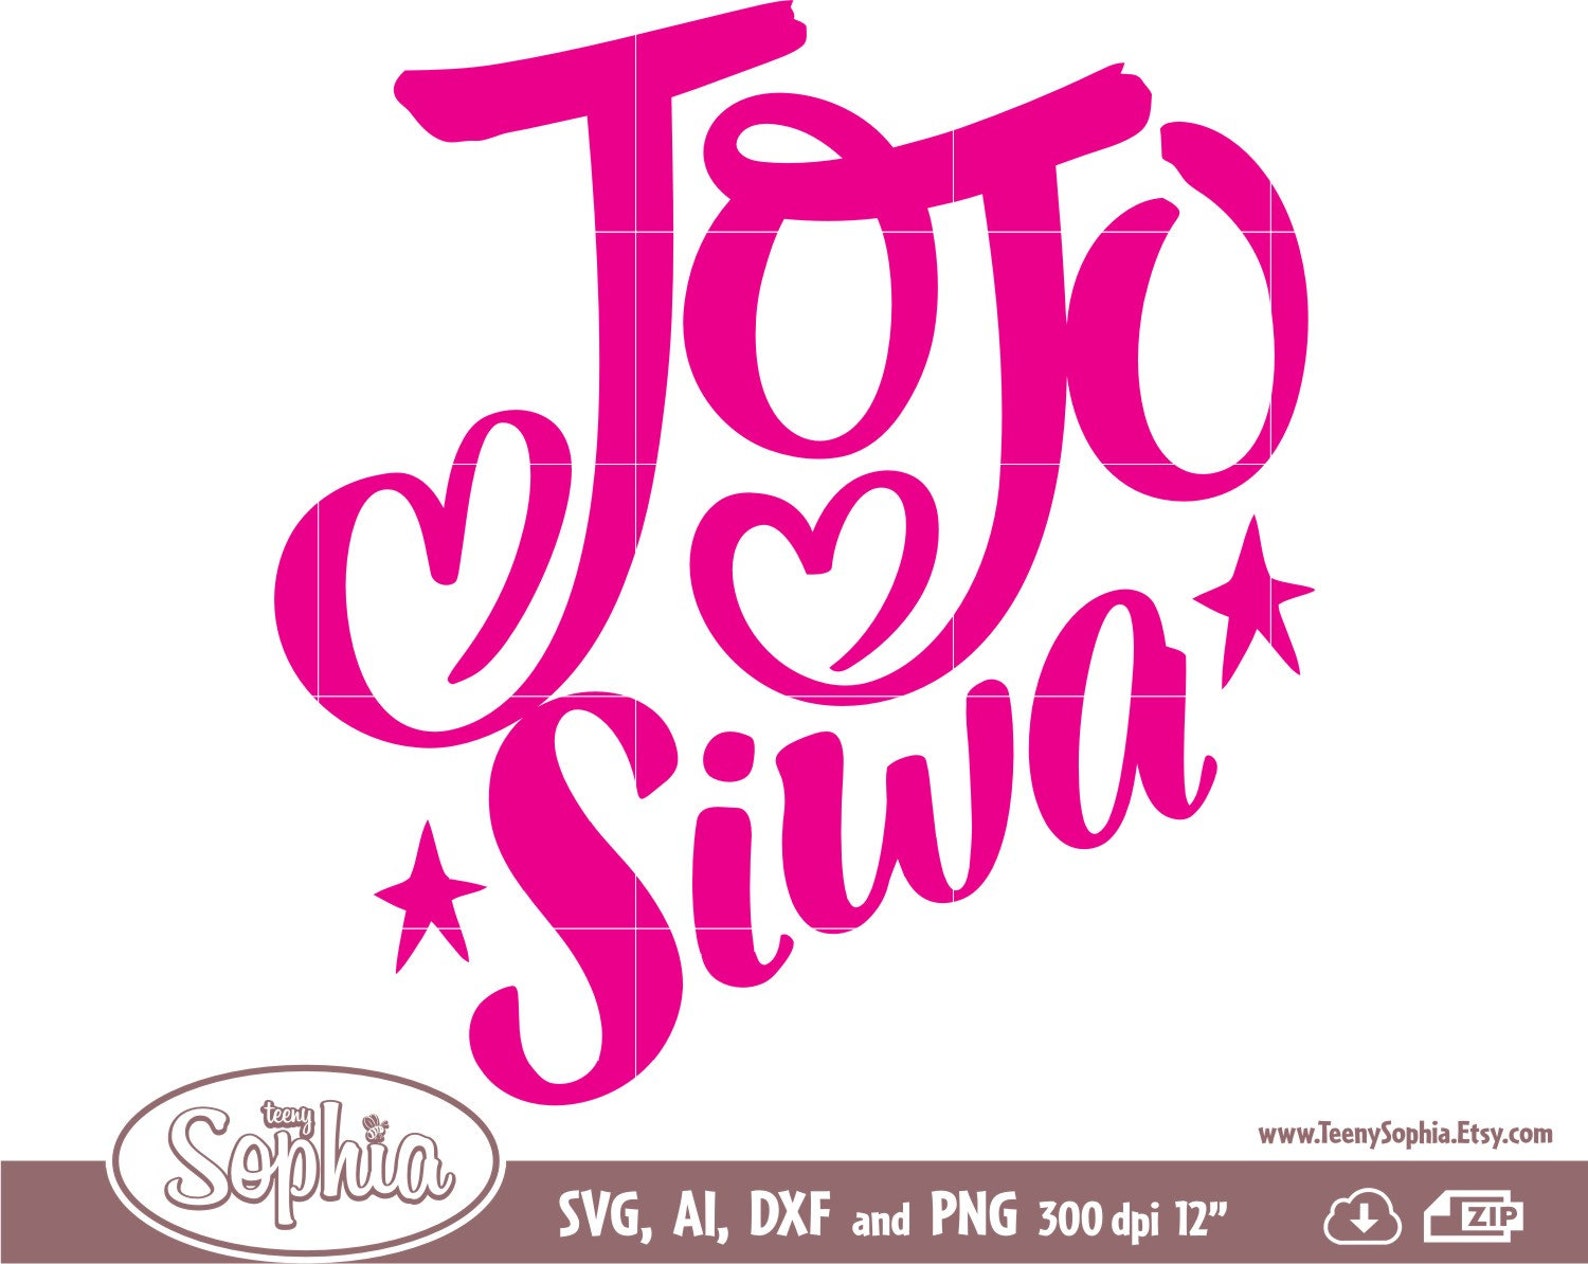 Jojo Siwa & Bow Bow show 8 cliparts logos. Svg File for | Etsy